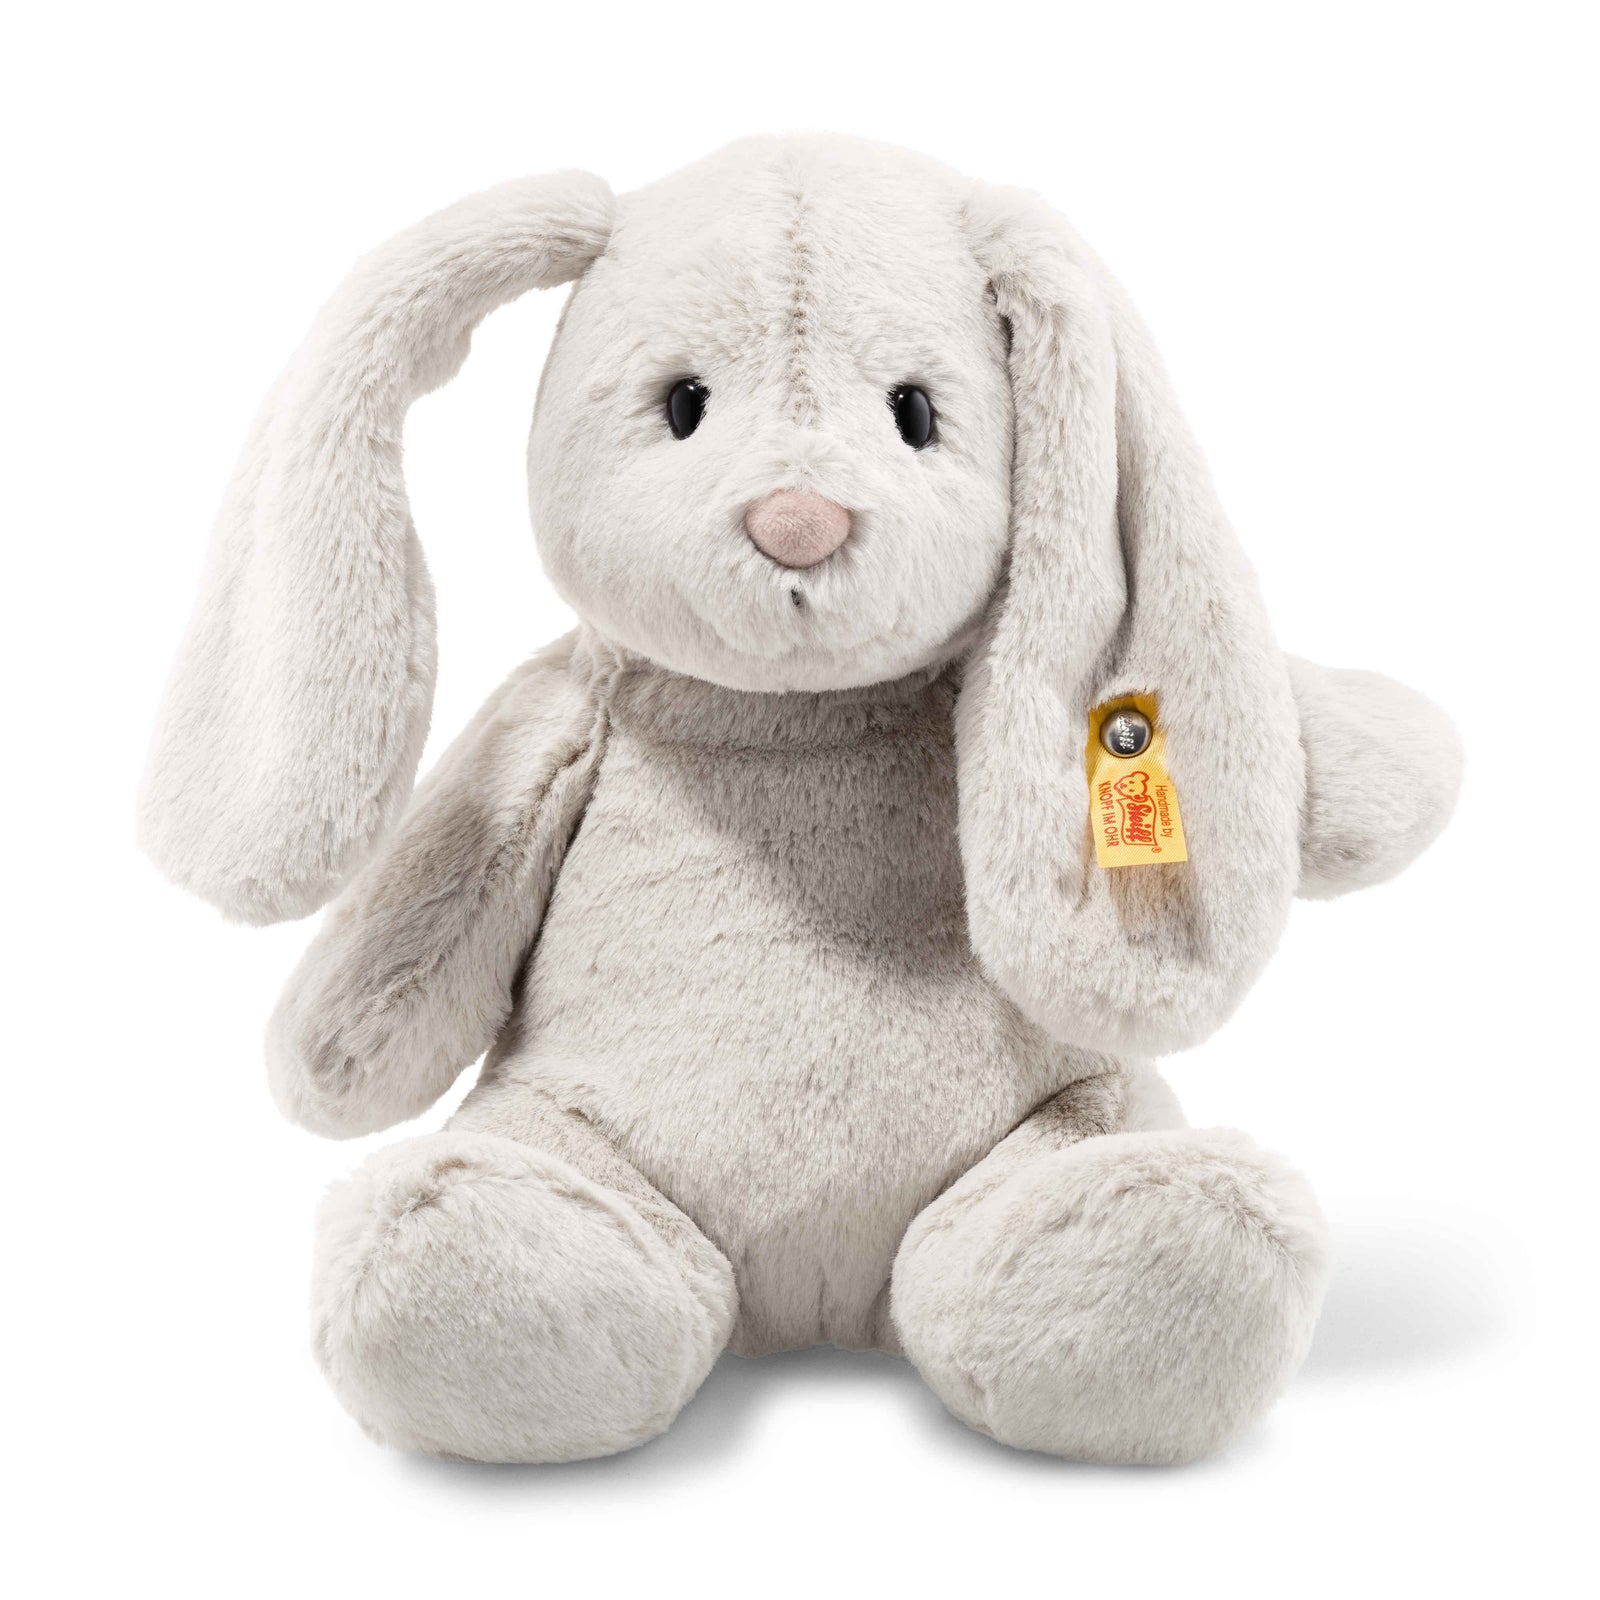 Steiff Soft & Cuddly Hoppie Rabbit - EAN 080470